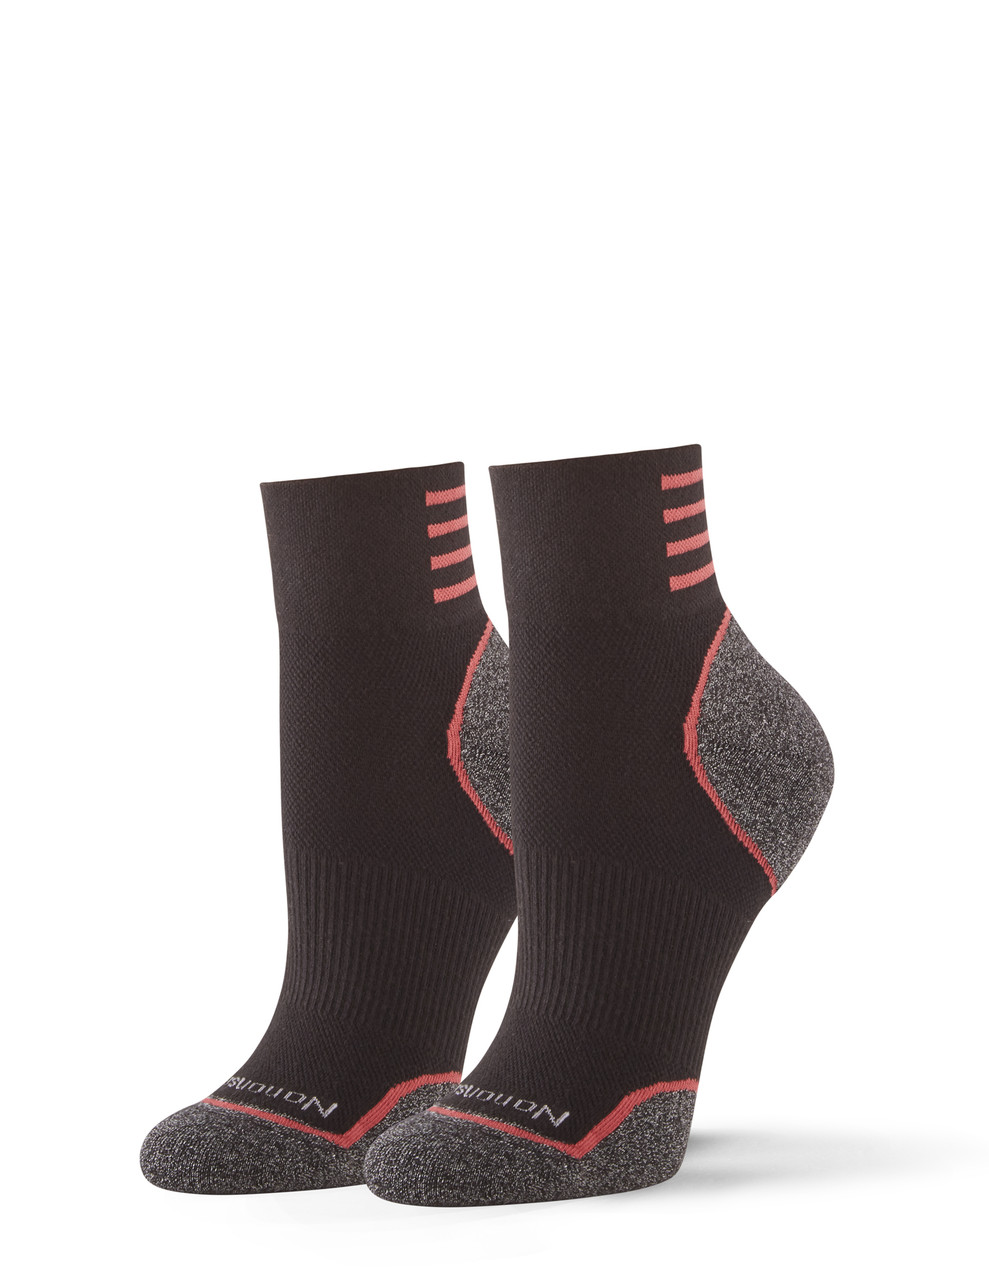 No Nonsense Women's Quarter Length White Socks Soft & Breathable Size 4-10  - 3 pairs